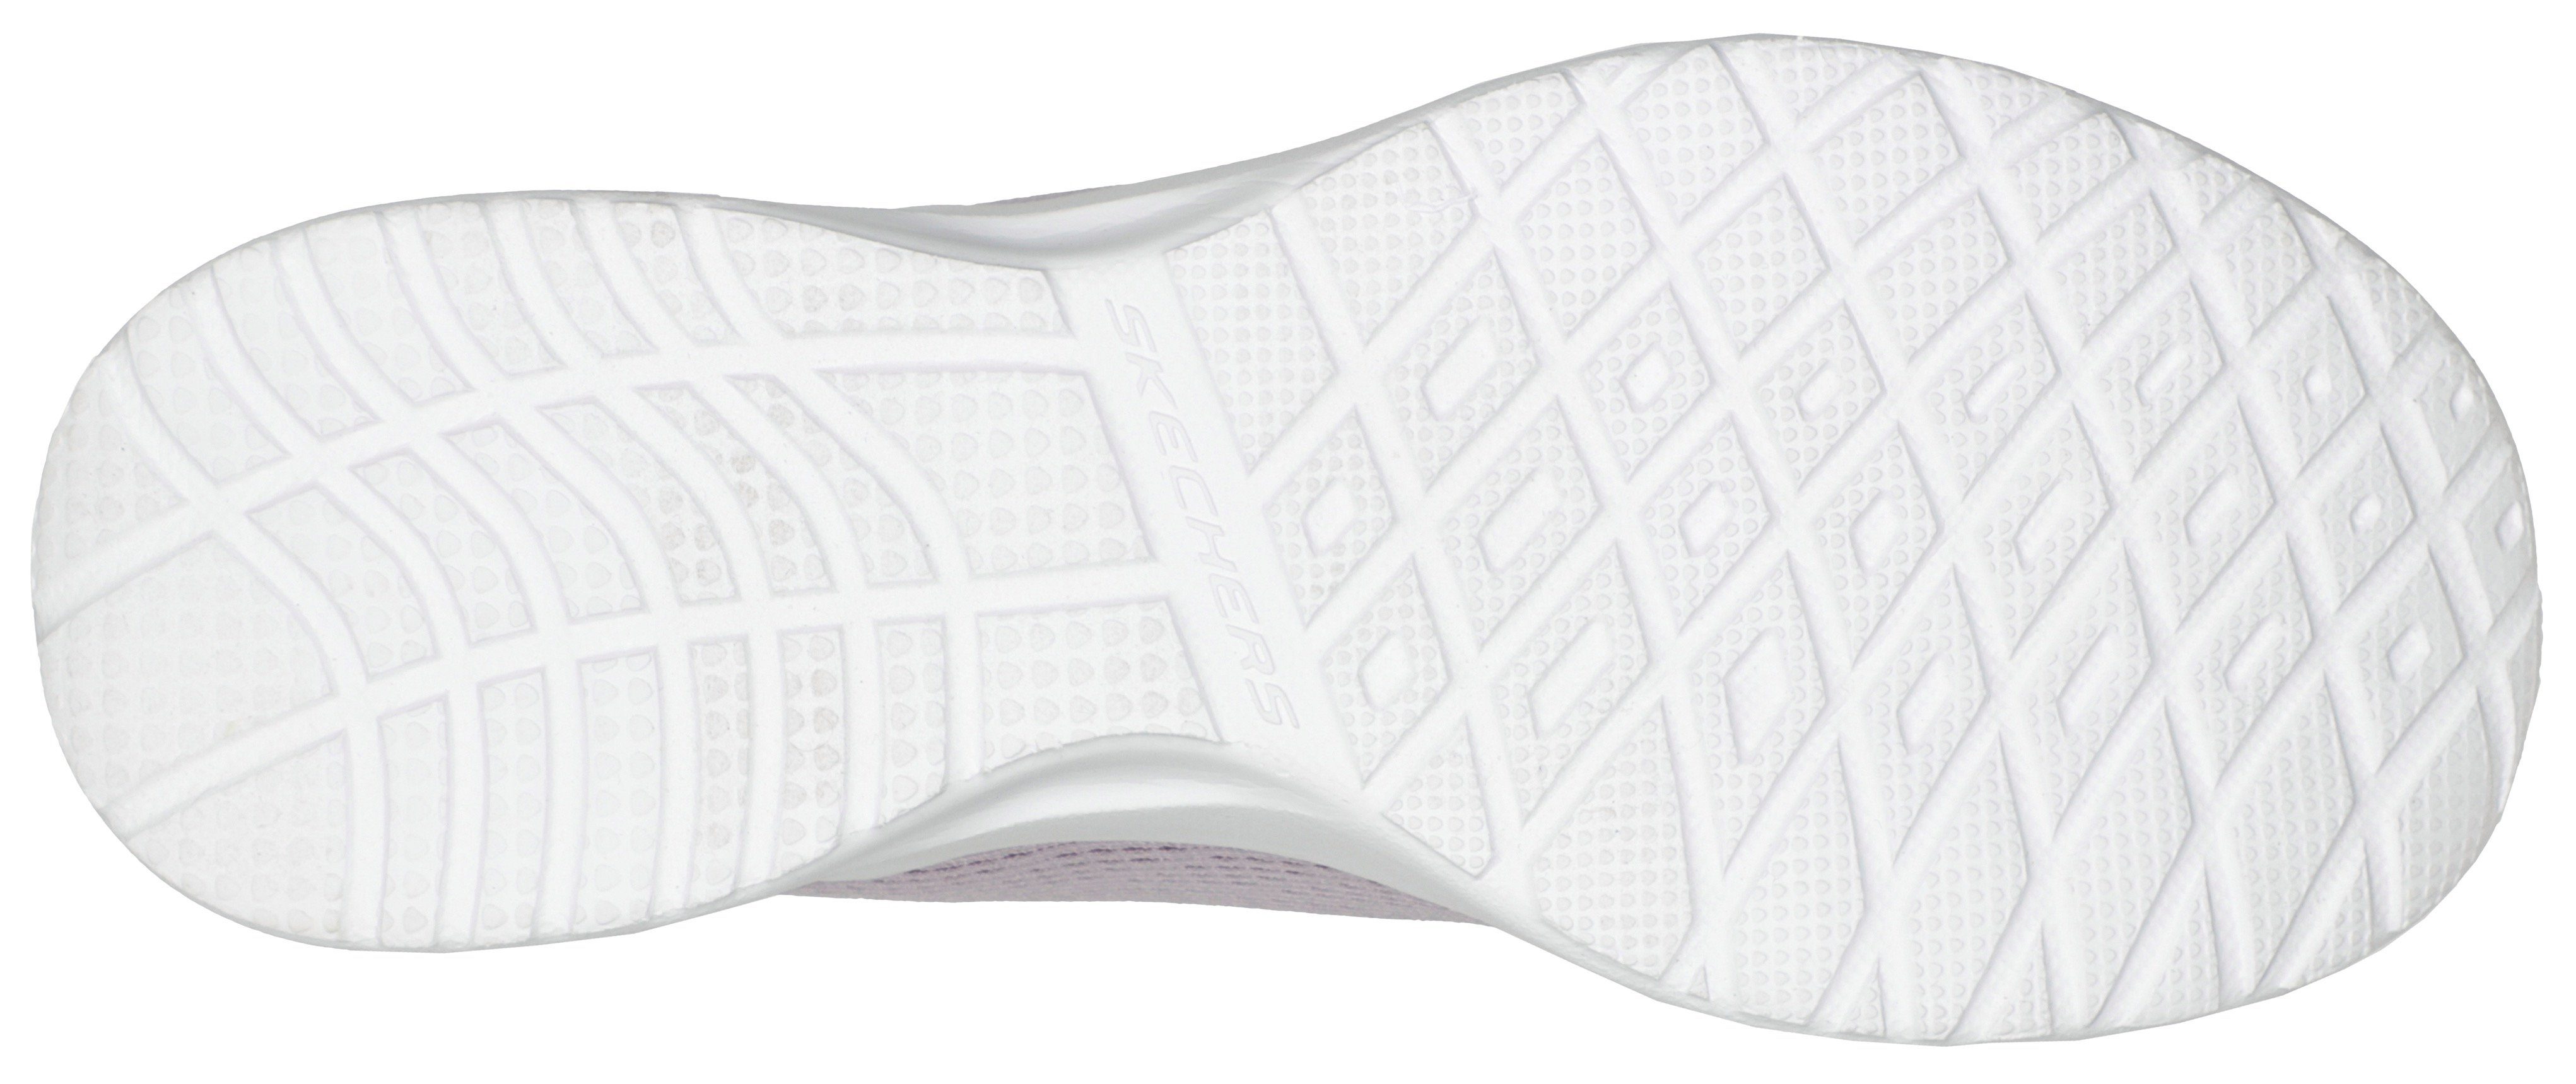 Print Sneaker Skechers OUT buntem der DYNAMIGHT SKECH-AIR mit lavendel-kombiniert an LAID Ferse